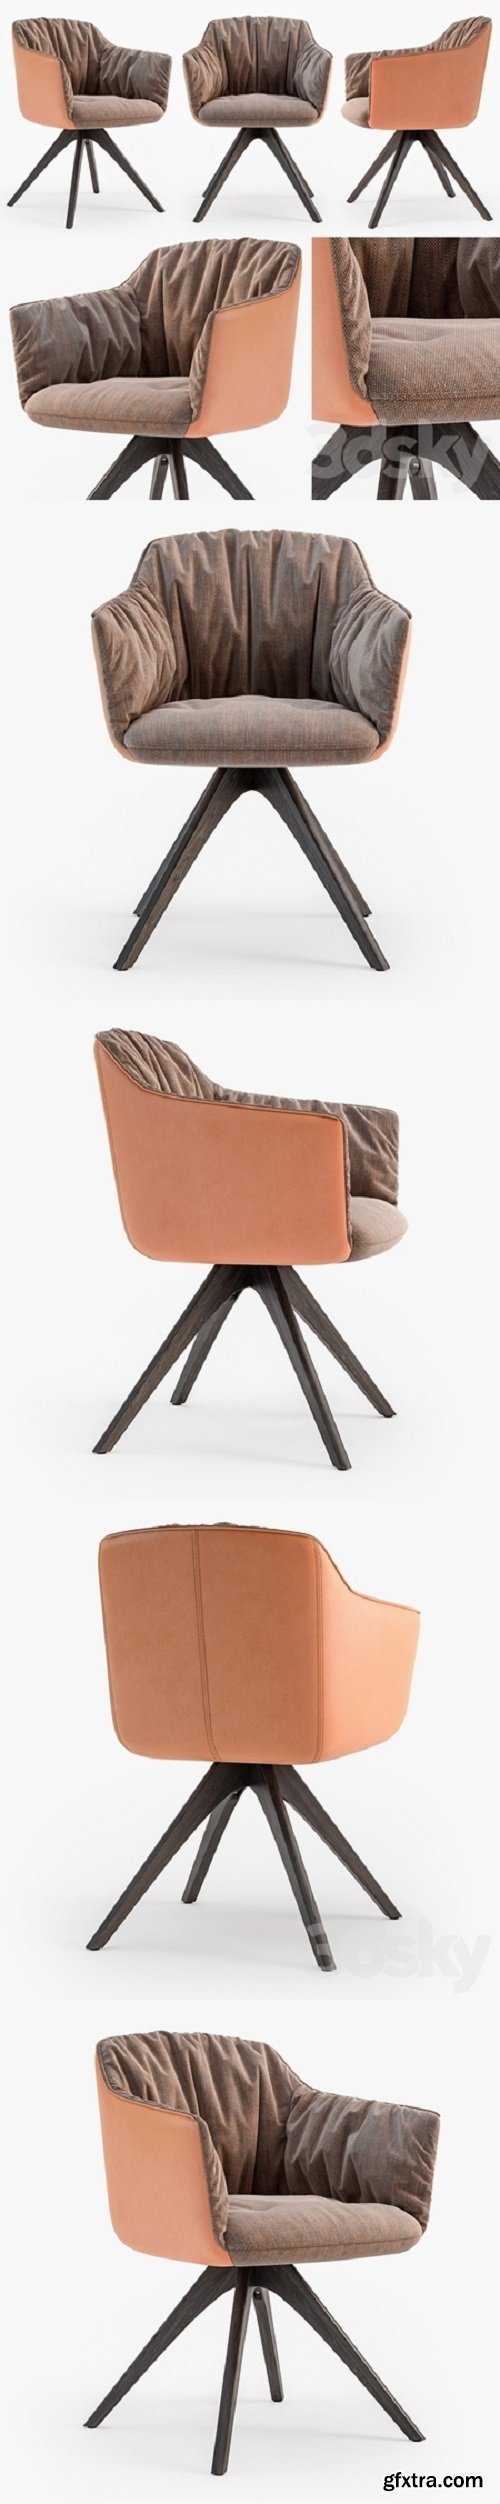 Pro 3DSky -  Rolf Benz 641 chair